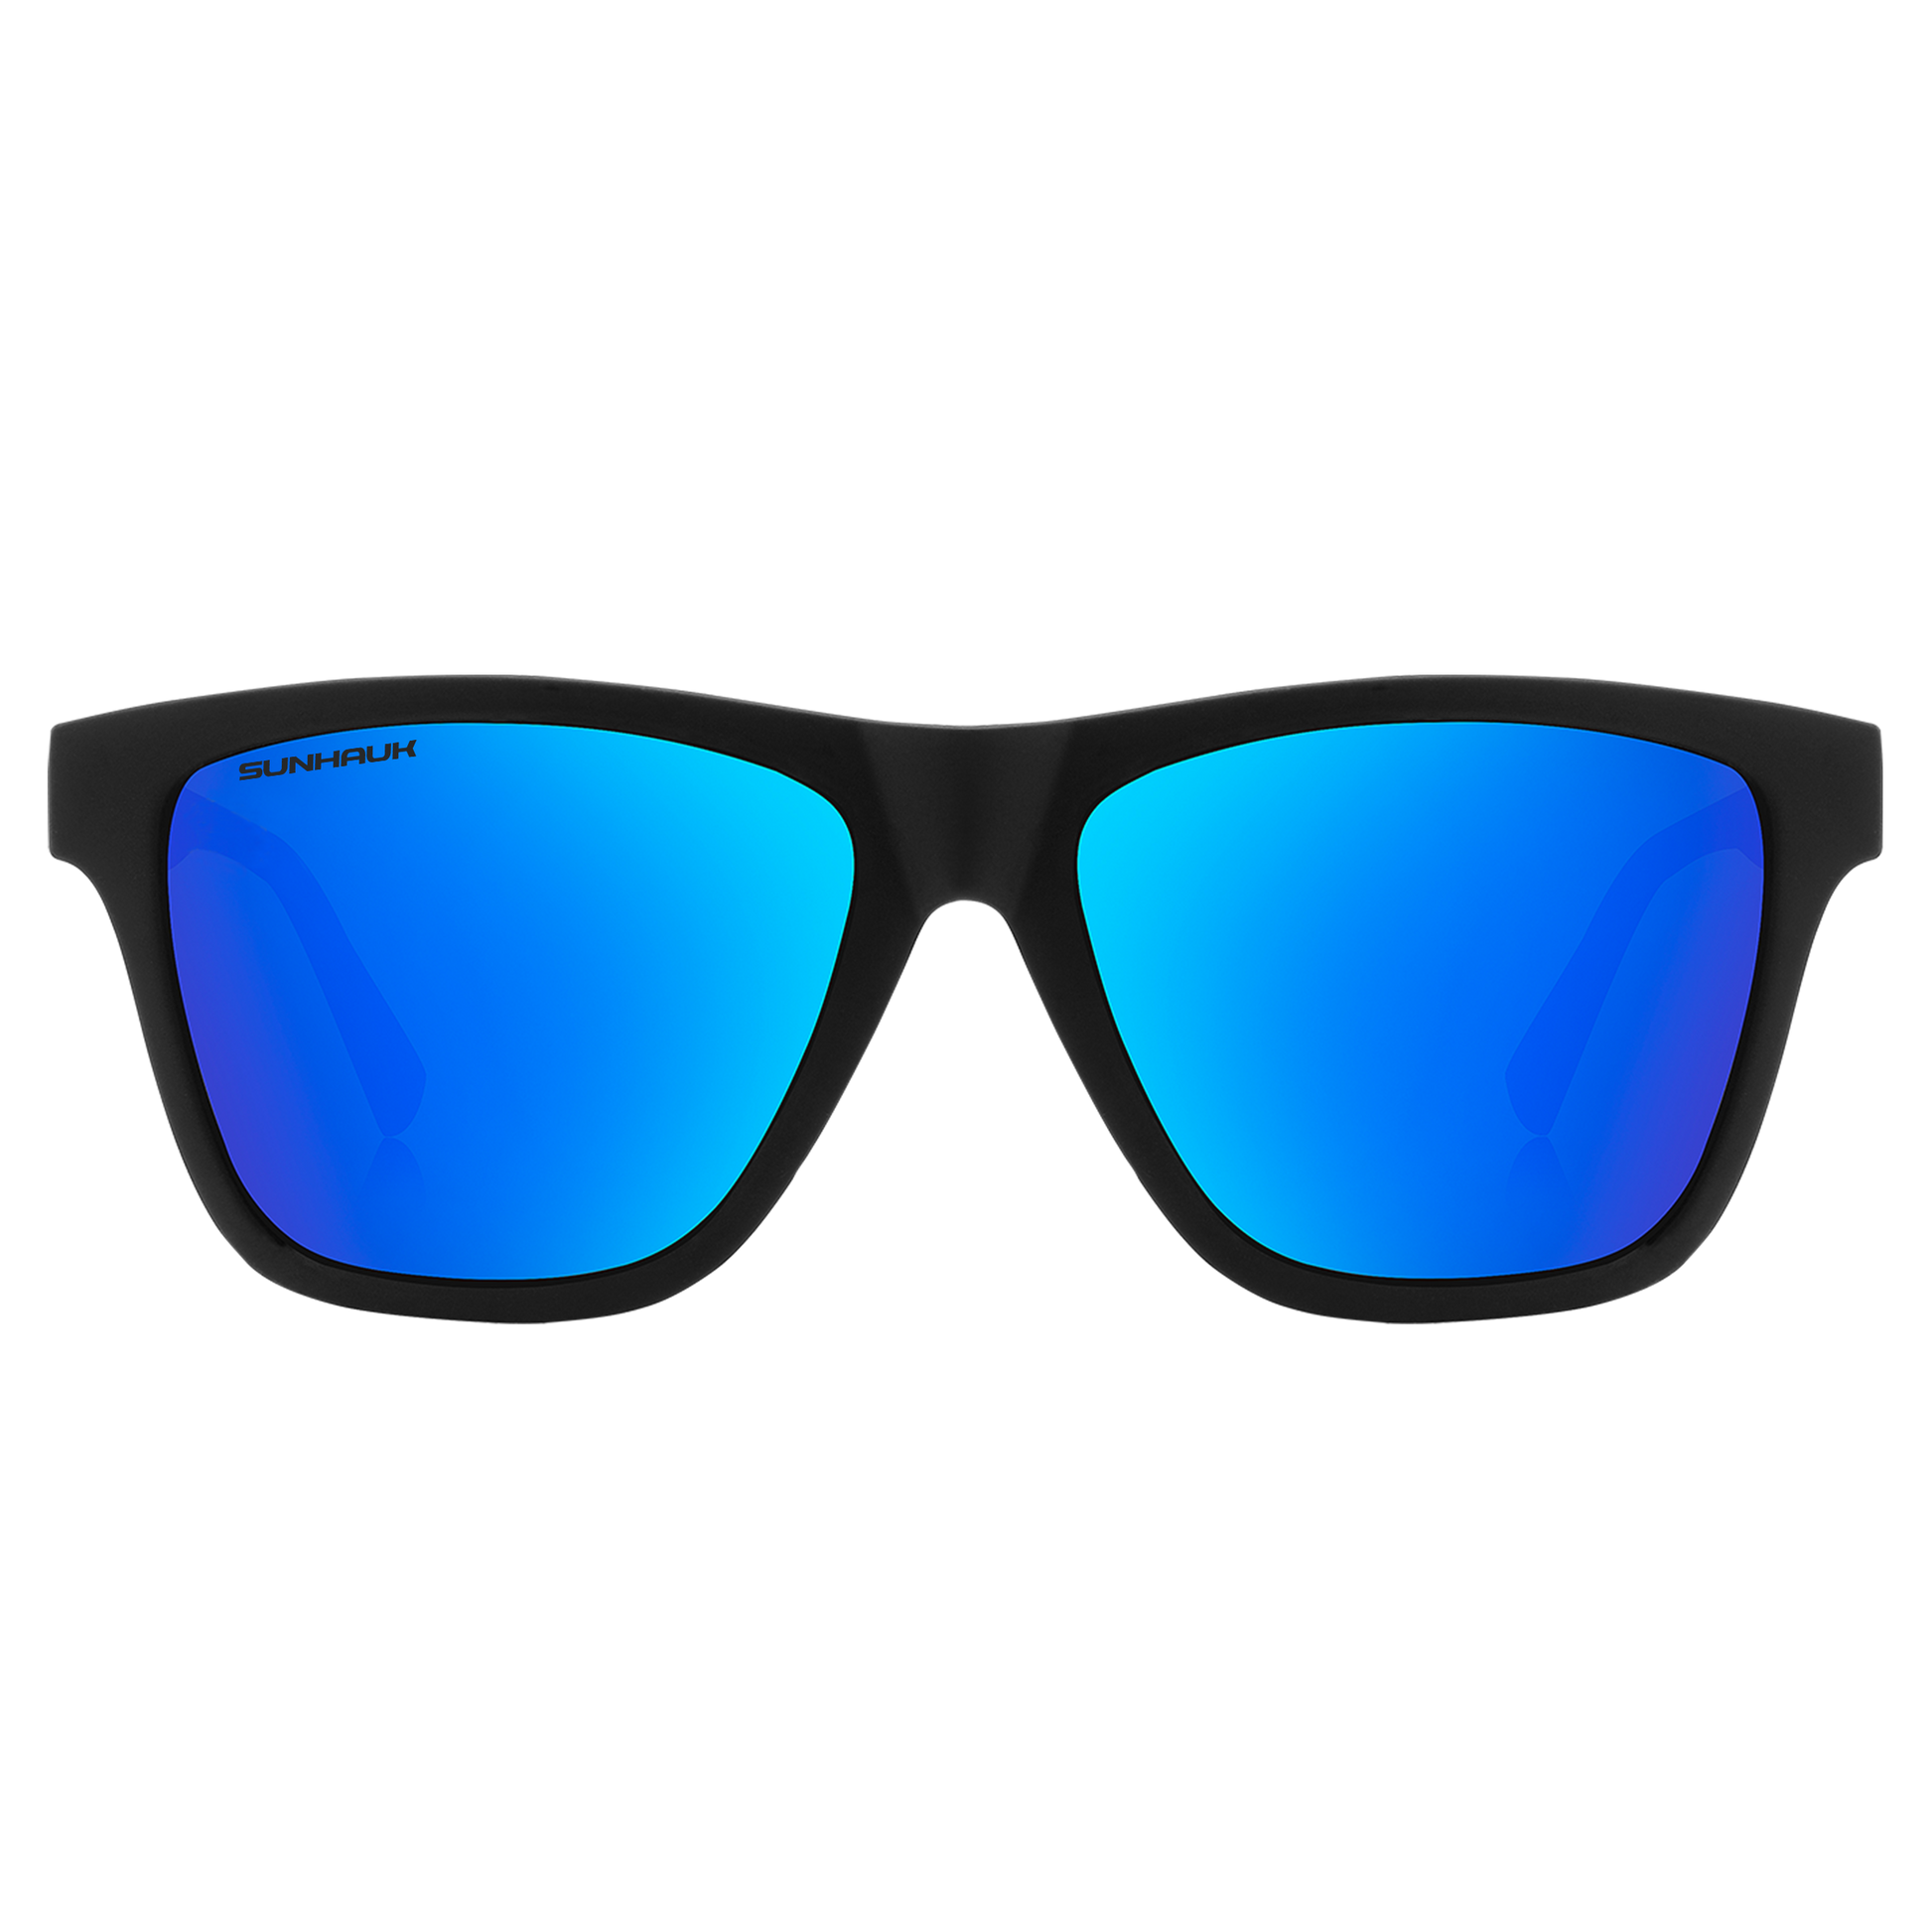 Blue Canyon - Sunglasses For The Beach | SUNHAUK